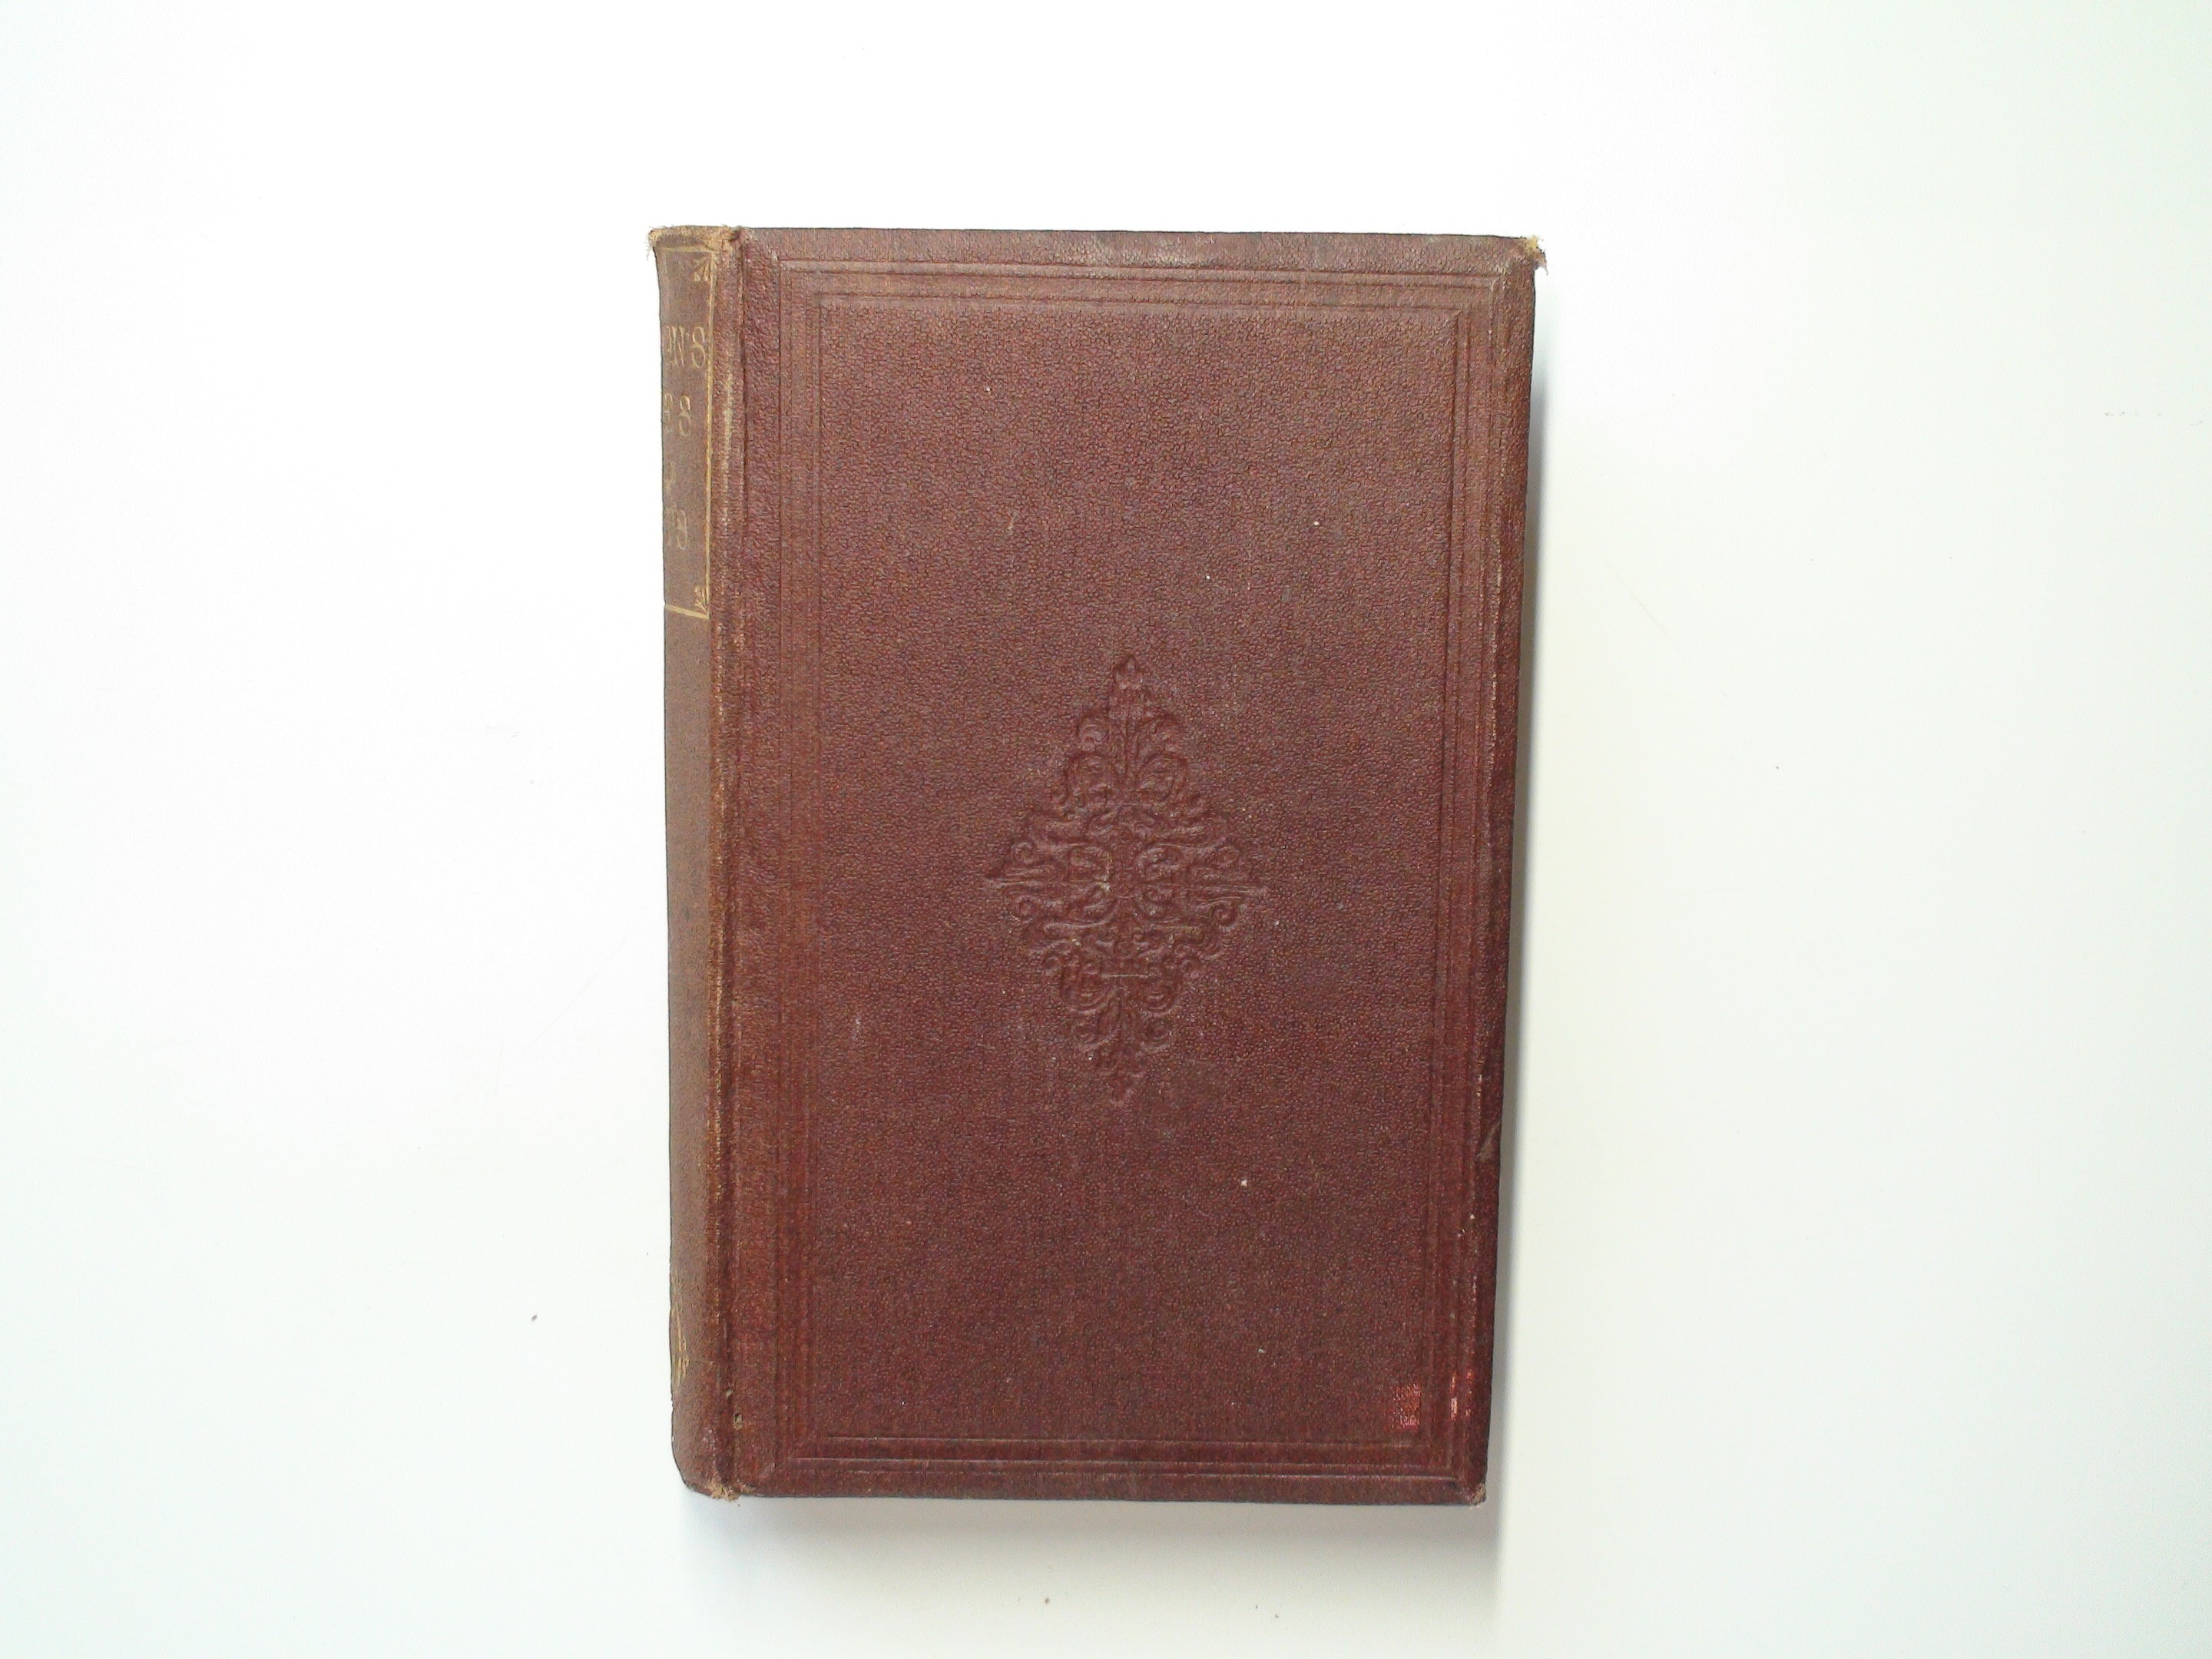 Lives of the Most Eminent English Poets, Samuel Johnson, Pub by Alfred Thomas Crocker, London, 1868